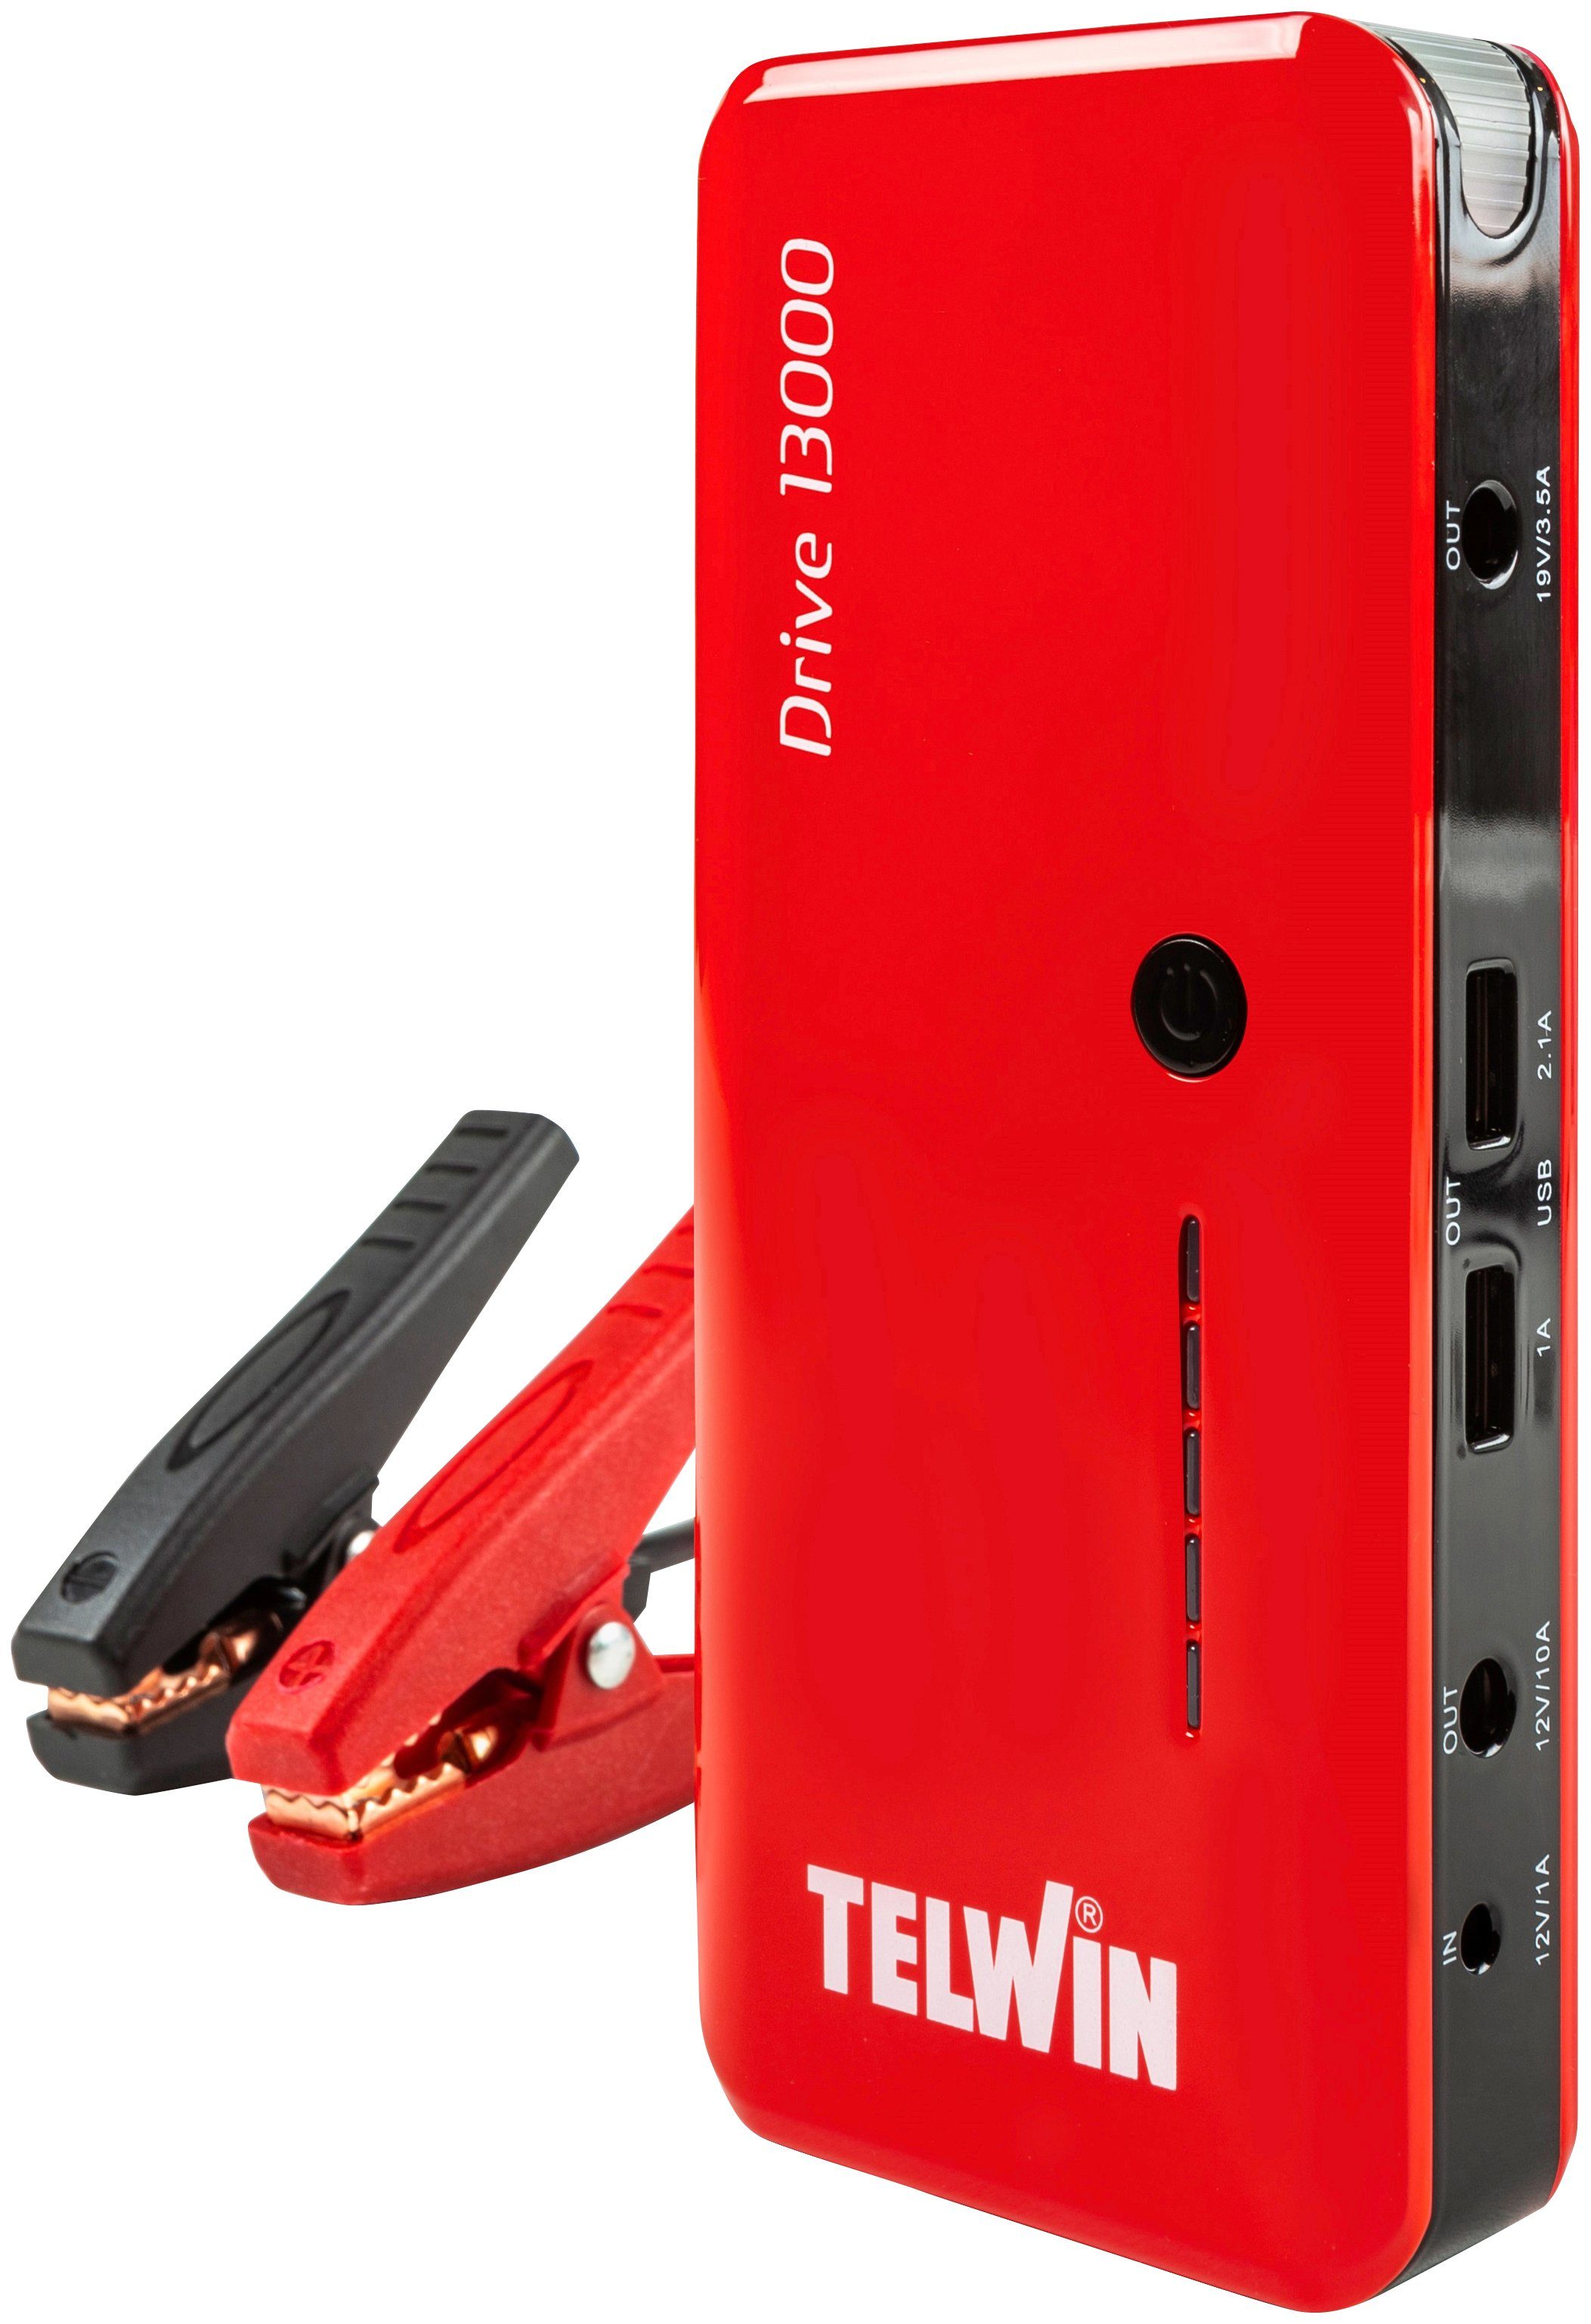 TELWIN Drive 13000 Autobatterie-Ladegerät (45000 mA, 12/19 V)